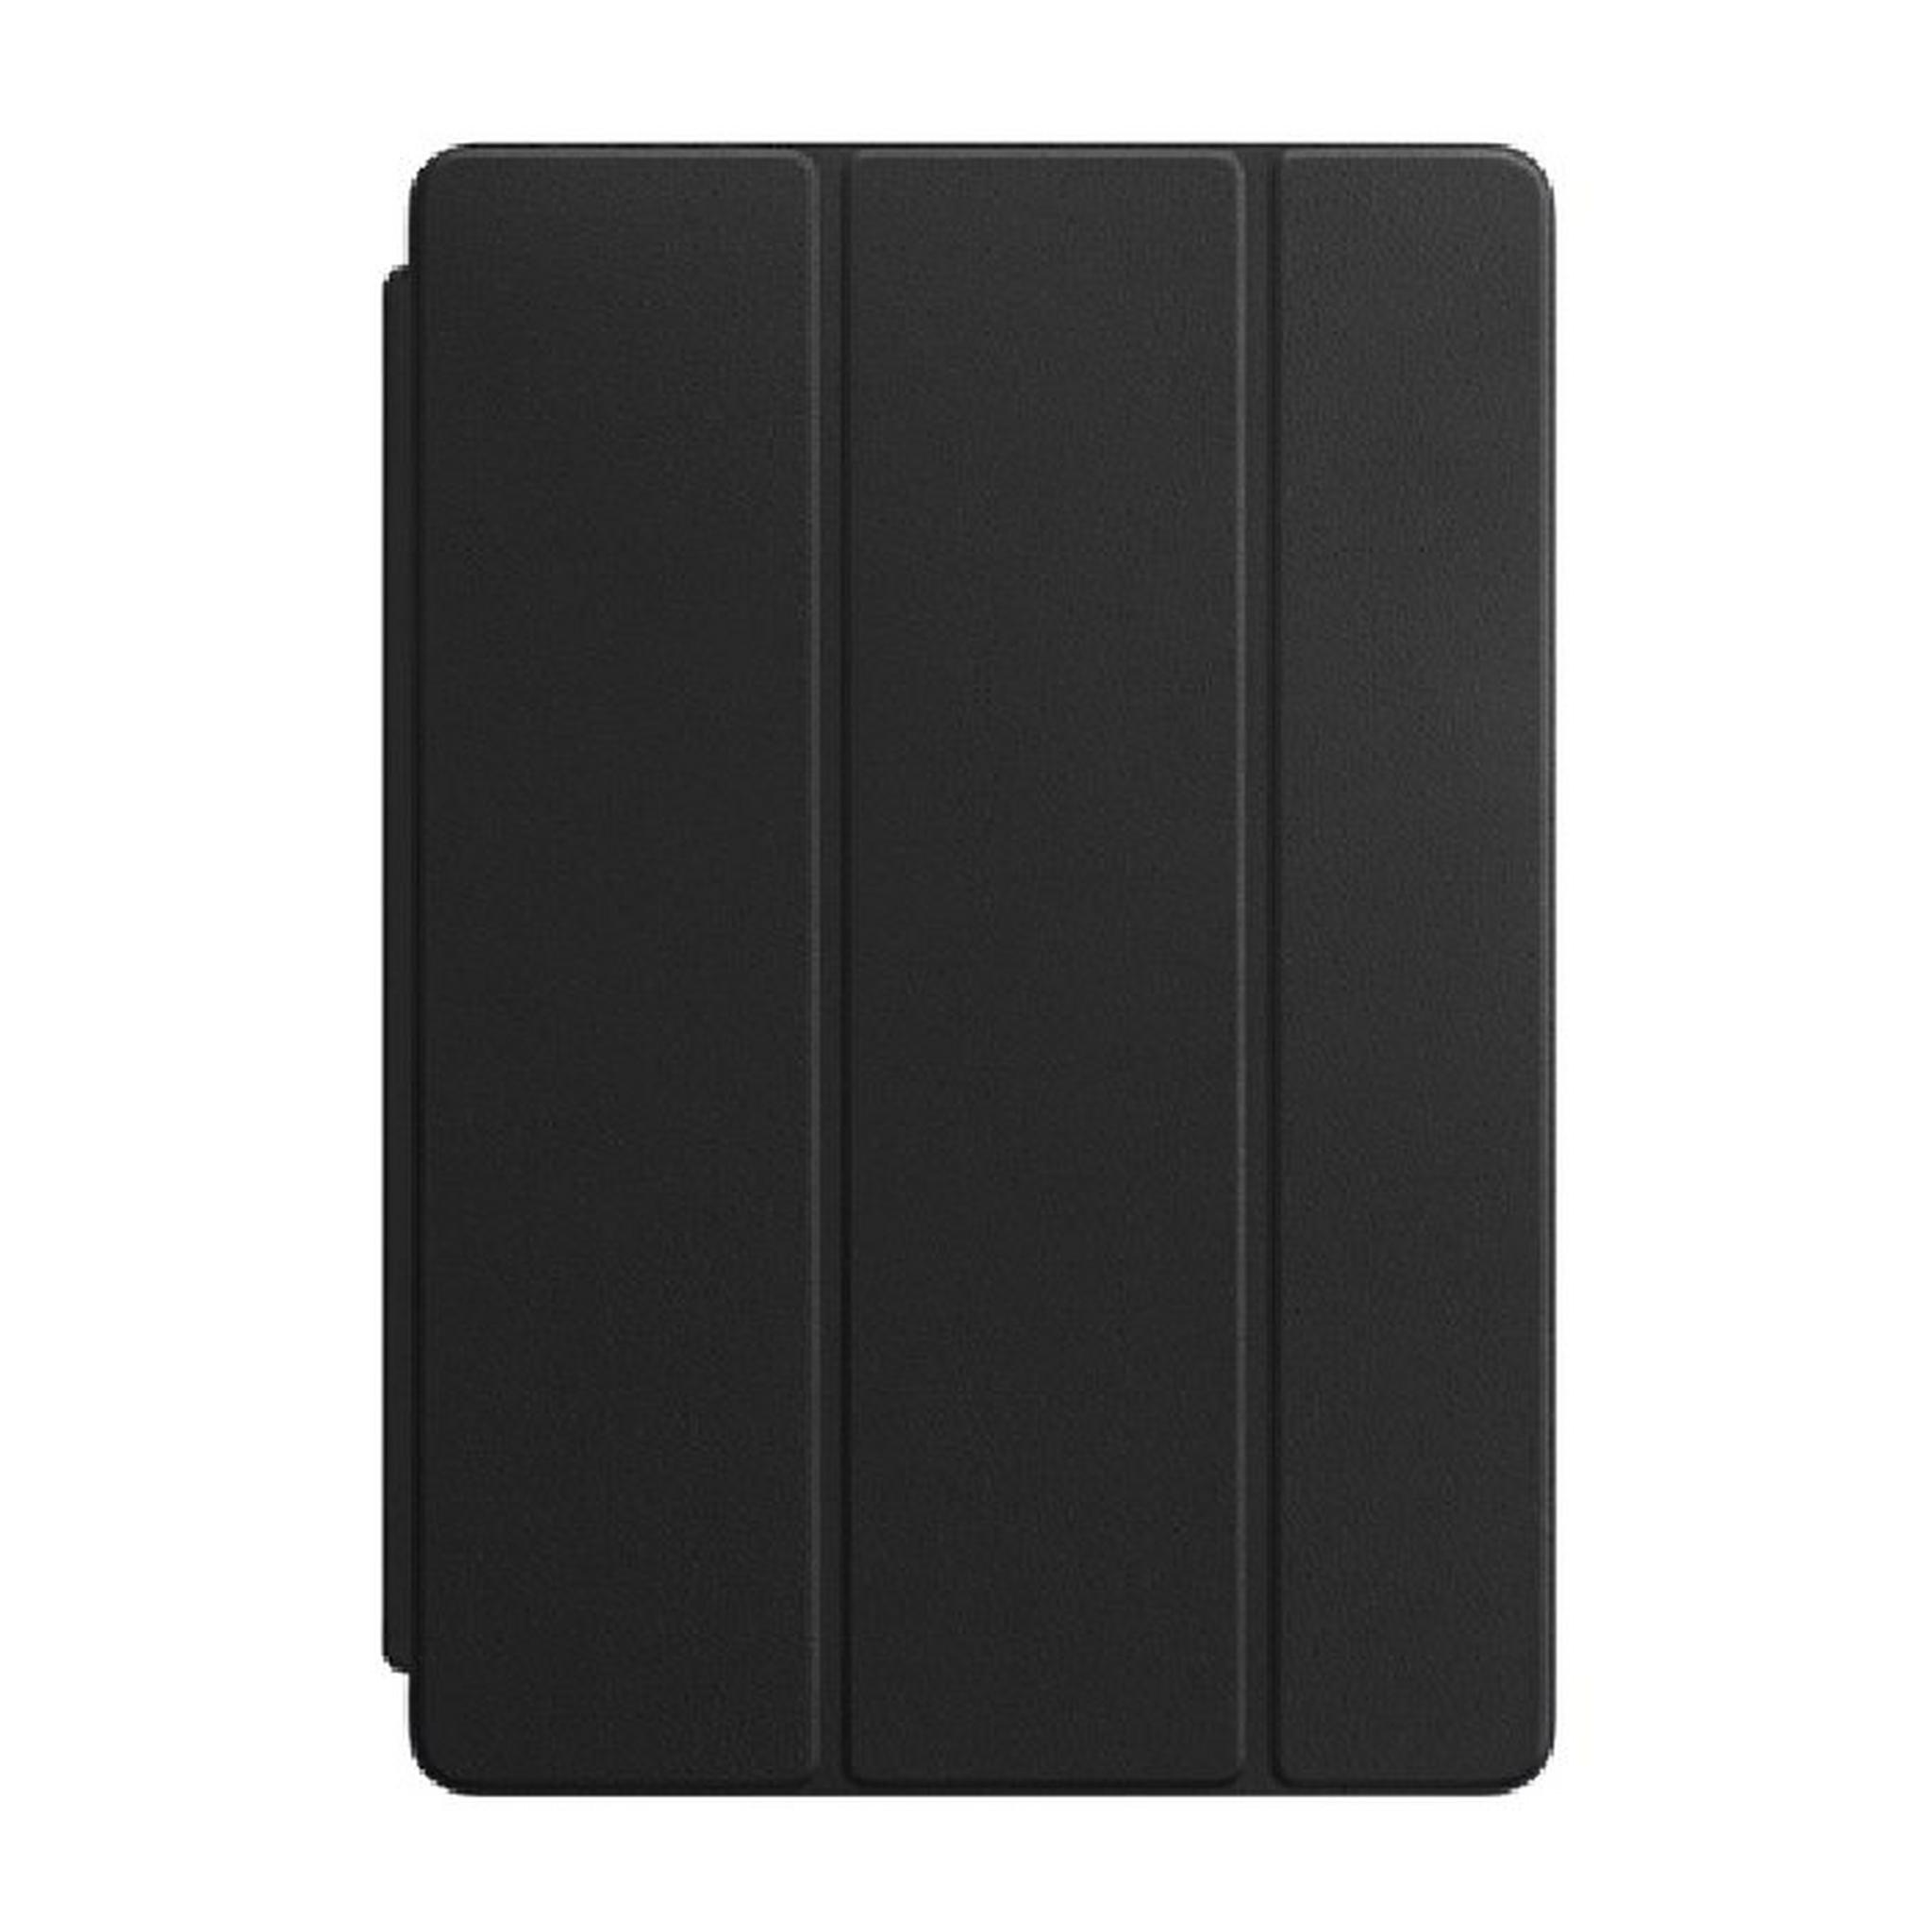 Apple Smart Cover for iPad 7th Gen & iPad Air 3rd Gen - Black